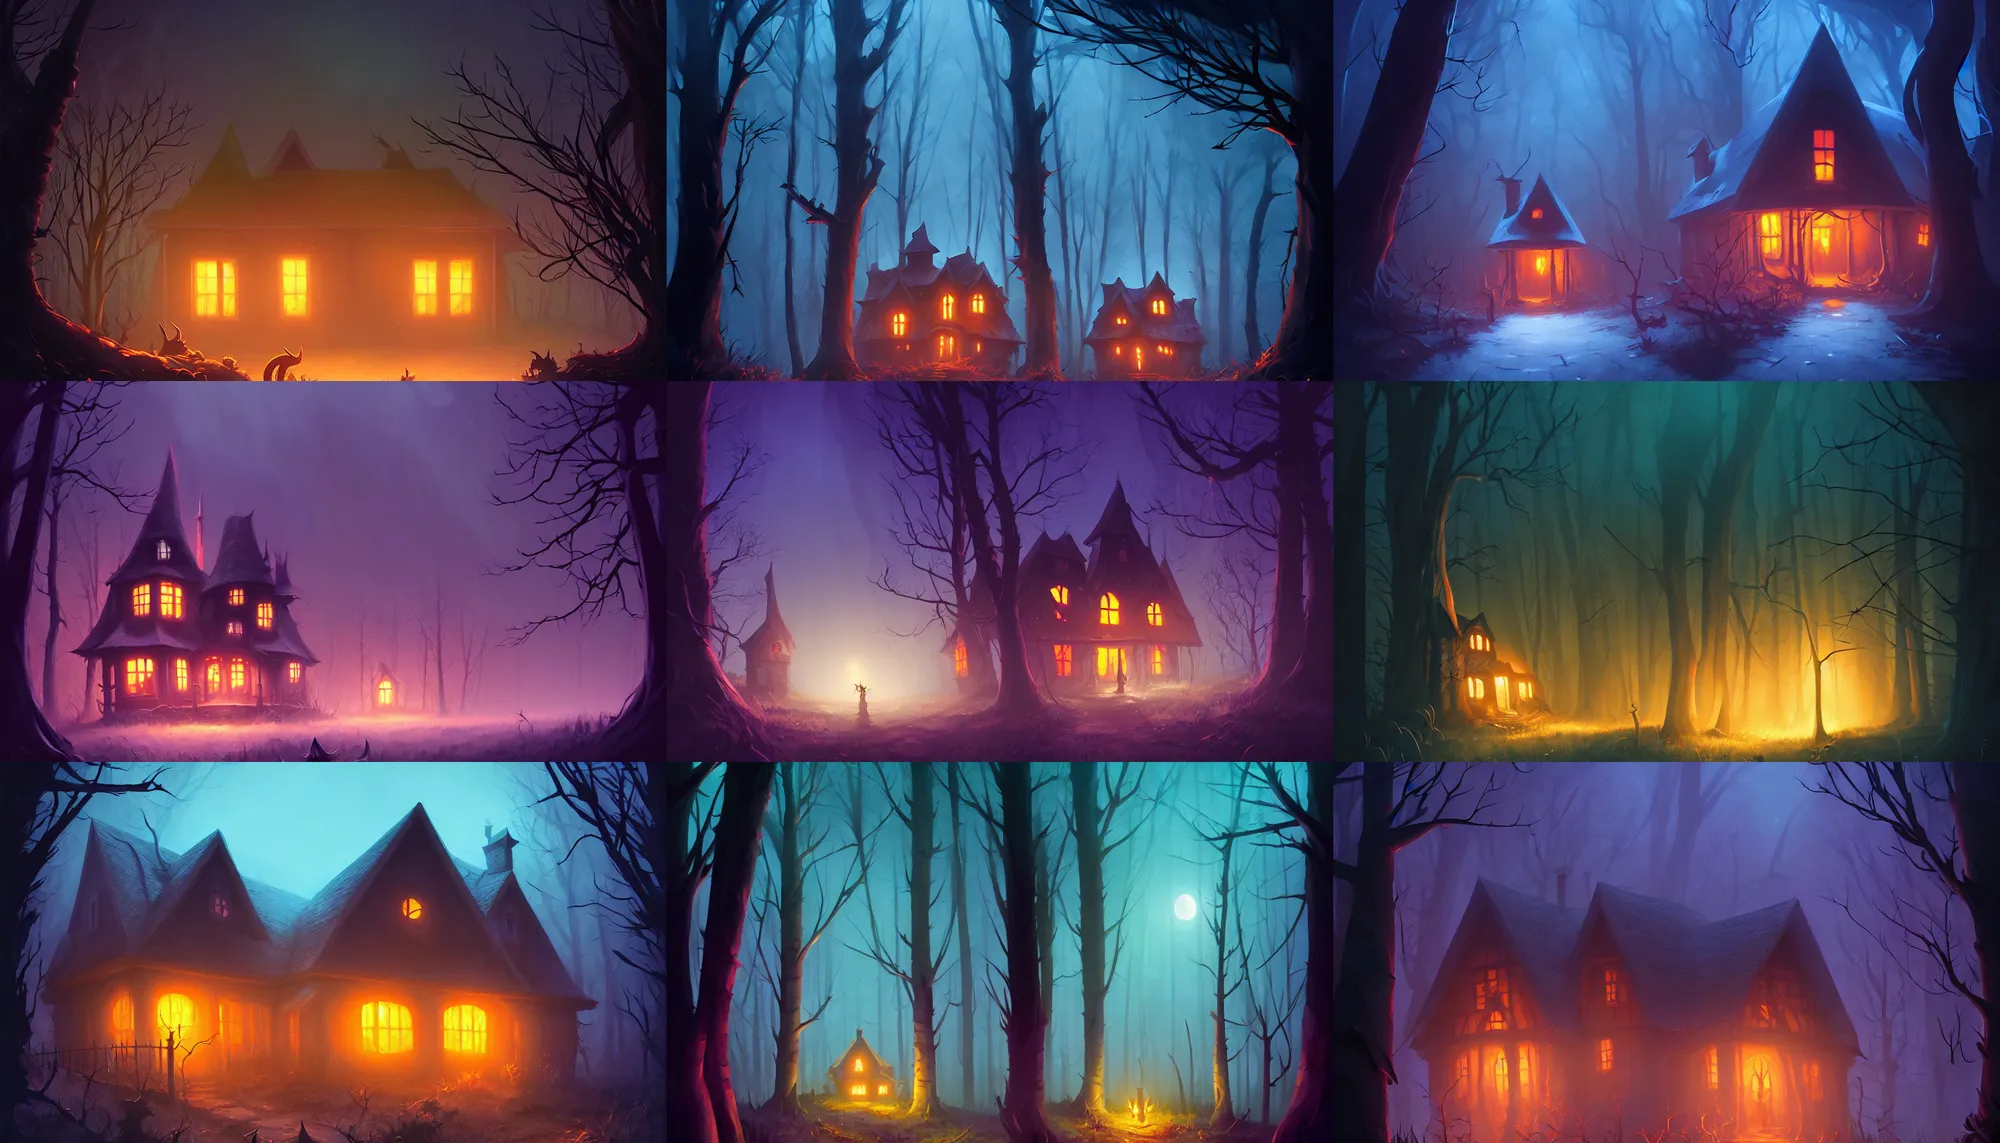 Prompt: frightening witch house in the dark woods, at night, behance hd by jesper ejsing, by rhads, makoto shinkai and lois van baarle, ilya kuvshinov, rossdraws global illumination